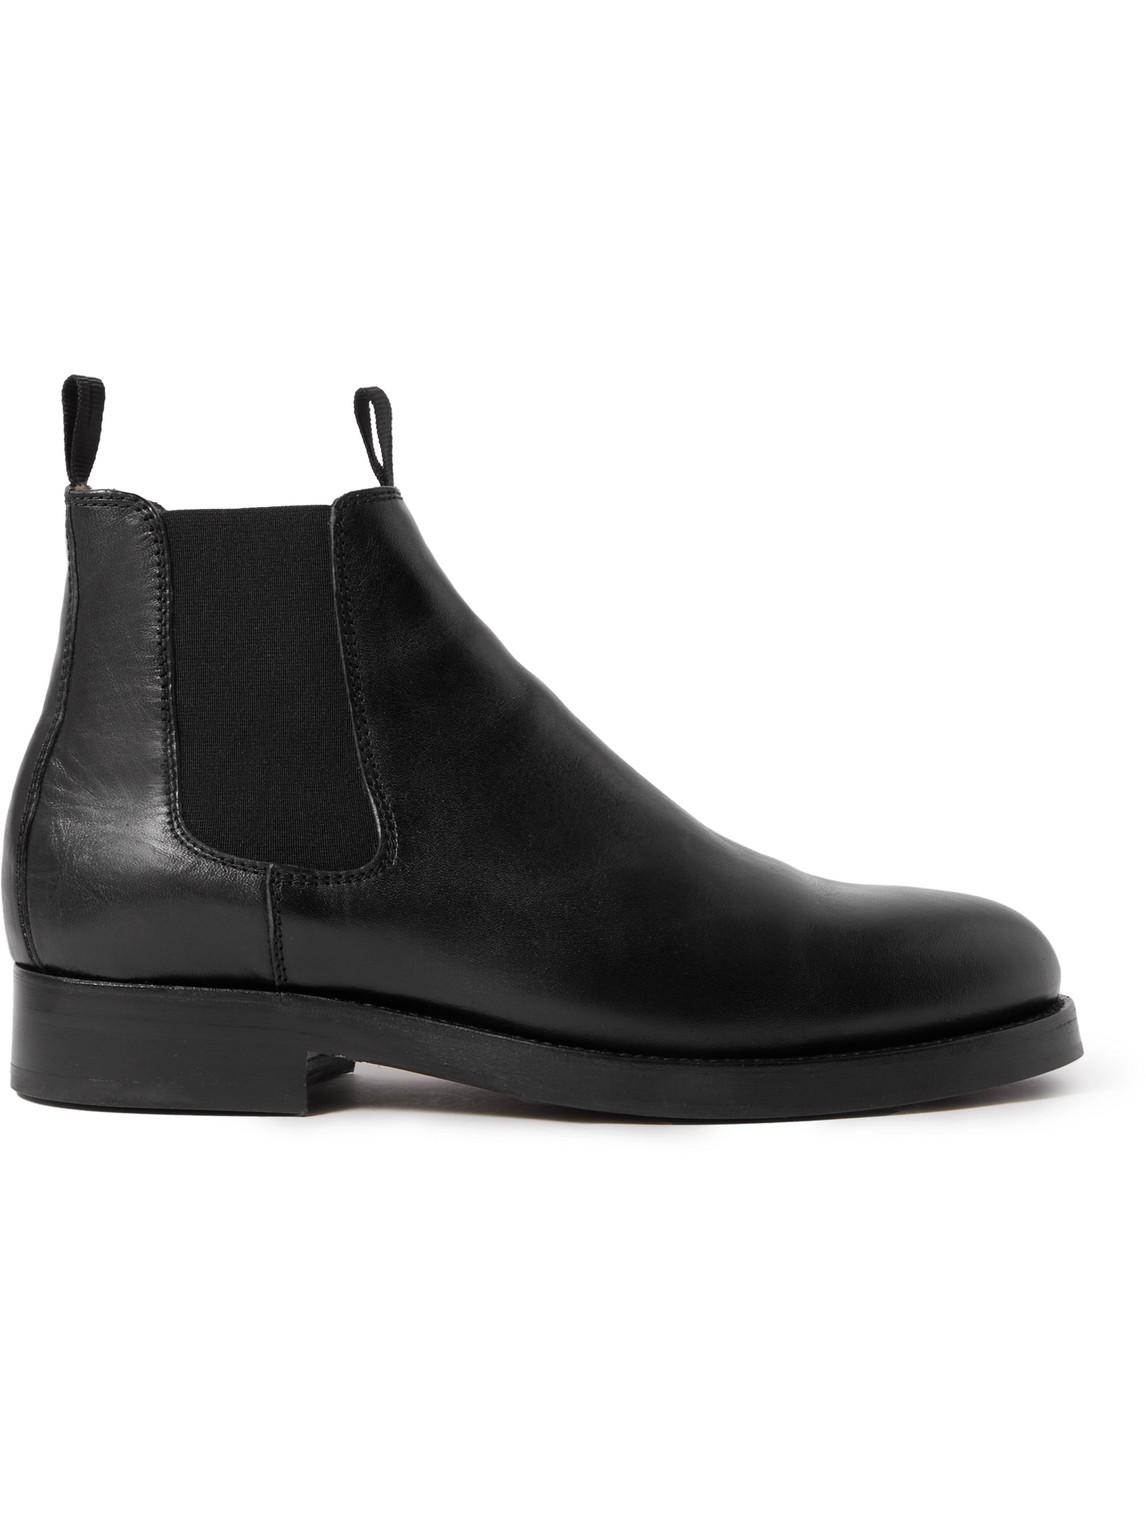 Belstaff Longton Leather Chelsea Boots in Black for Men | Lyst